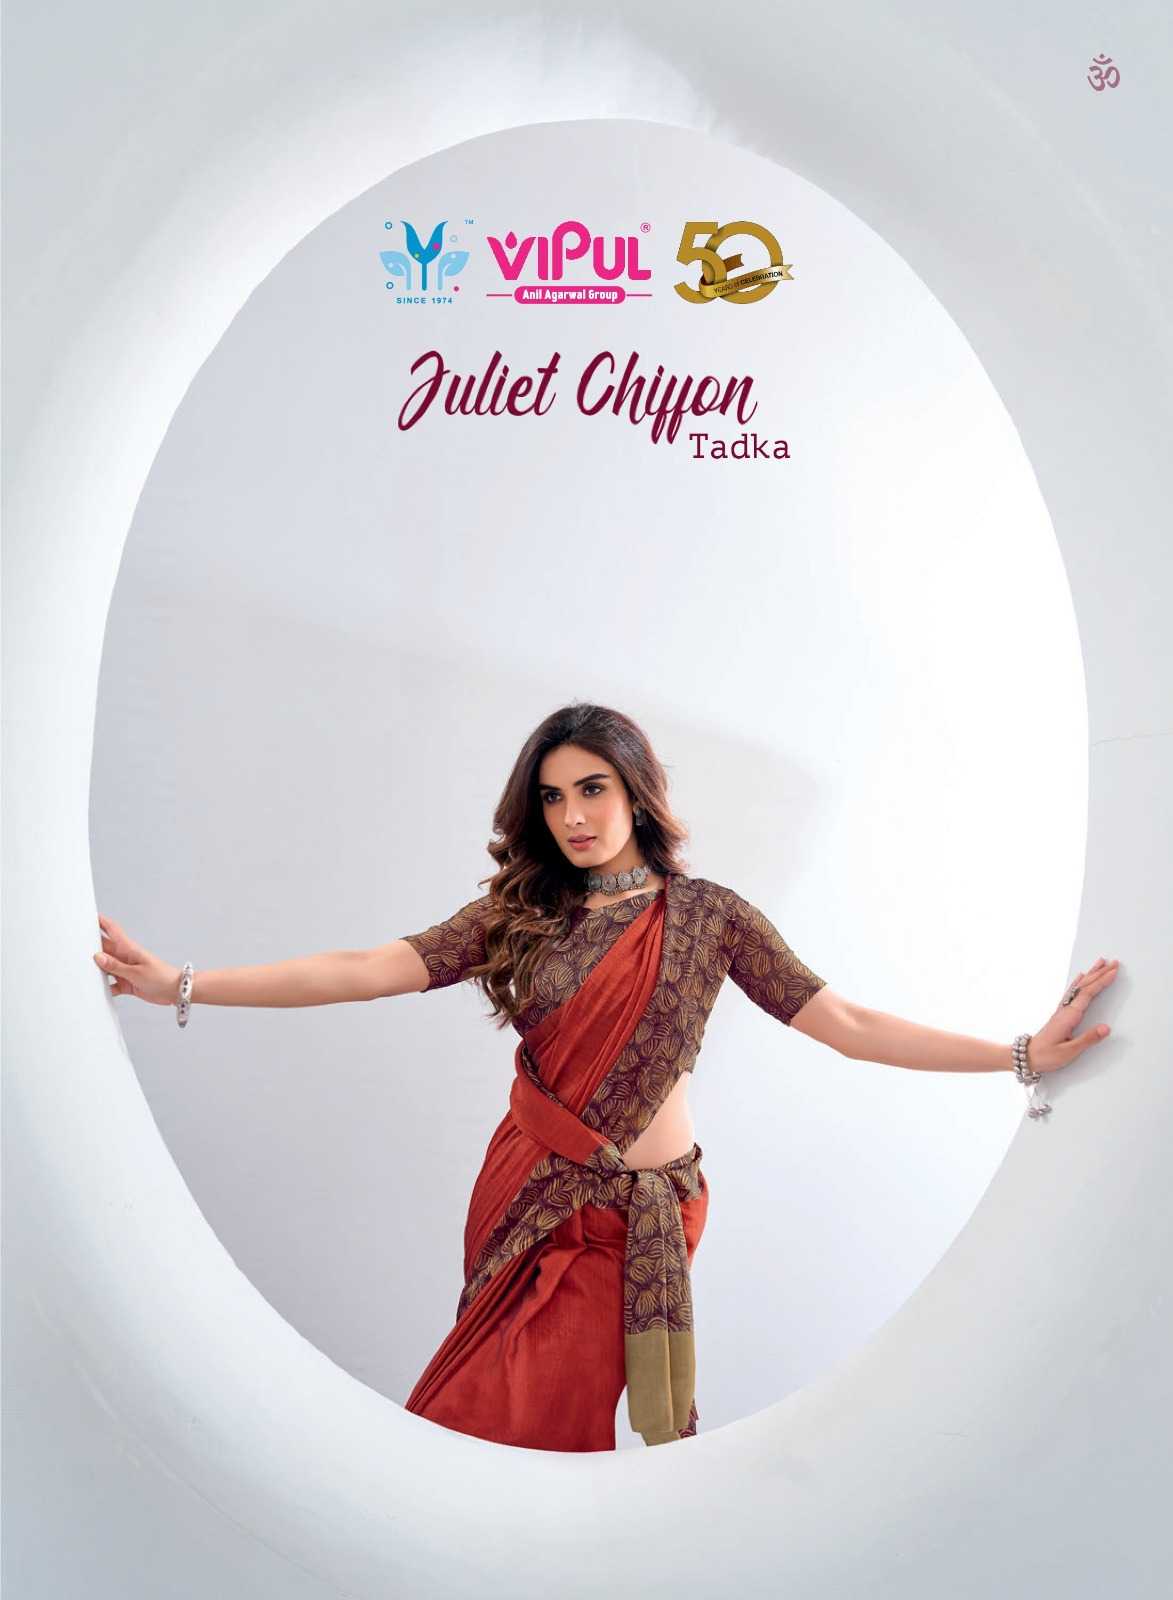 vipul fashion juliet chiffon tadka casual wear latest sarees catalog